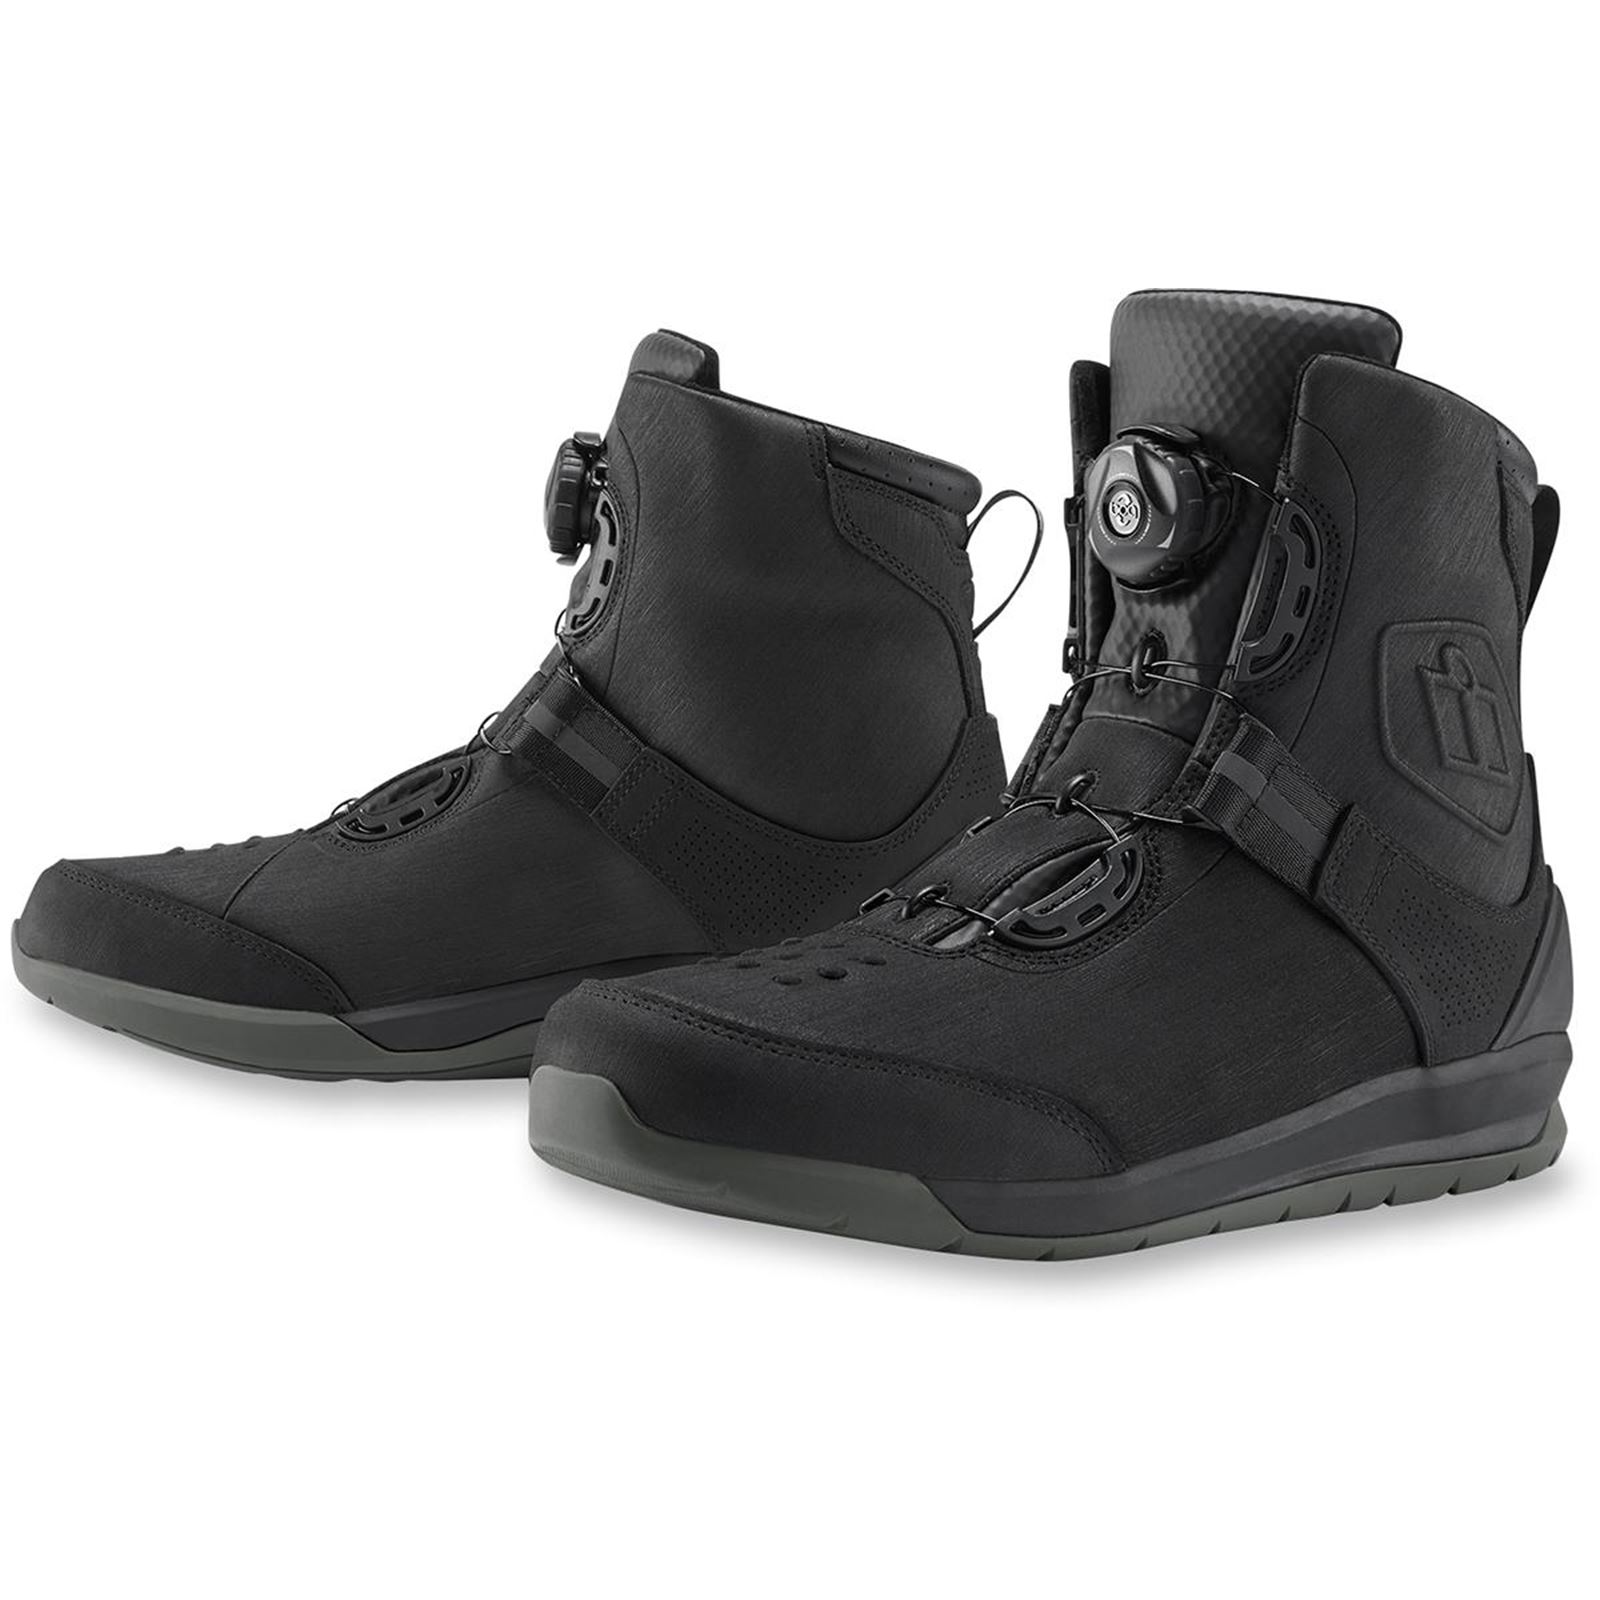 Icon Patrol 2 Boots - Black - Size 9.5